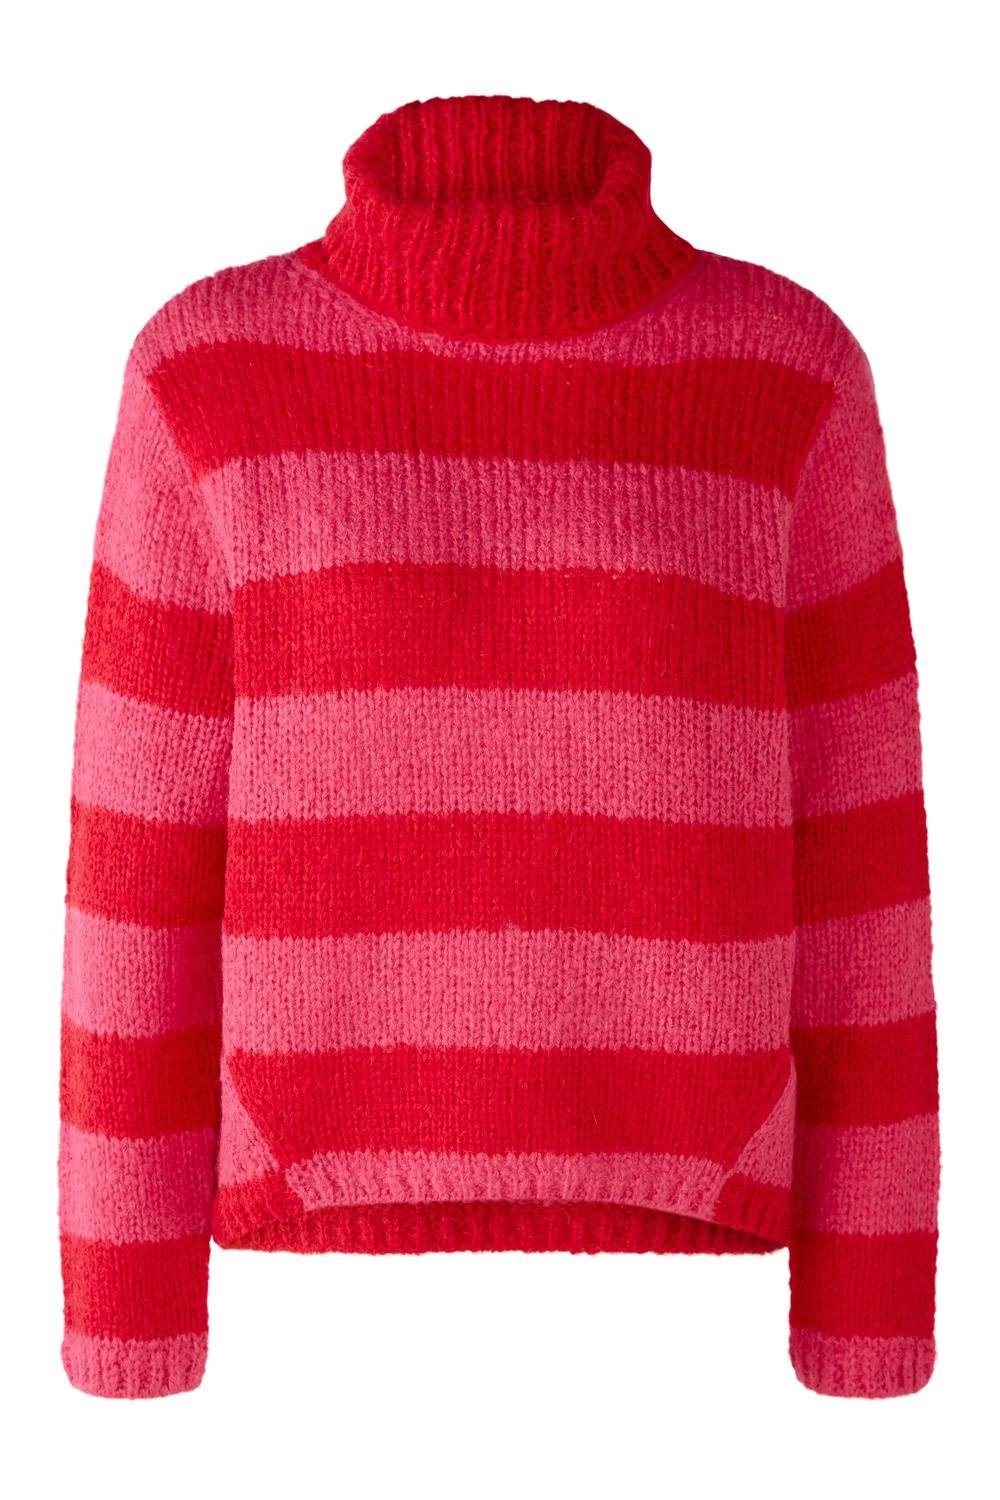 Oui Sweatshirt Pullover, red rose | 